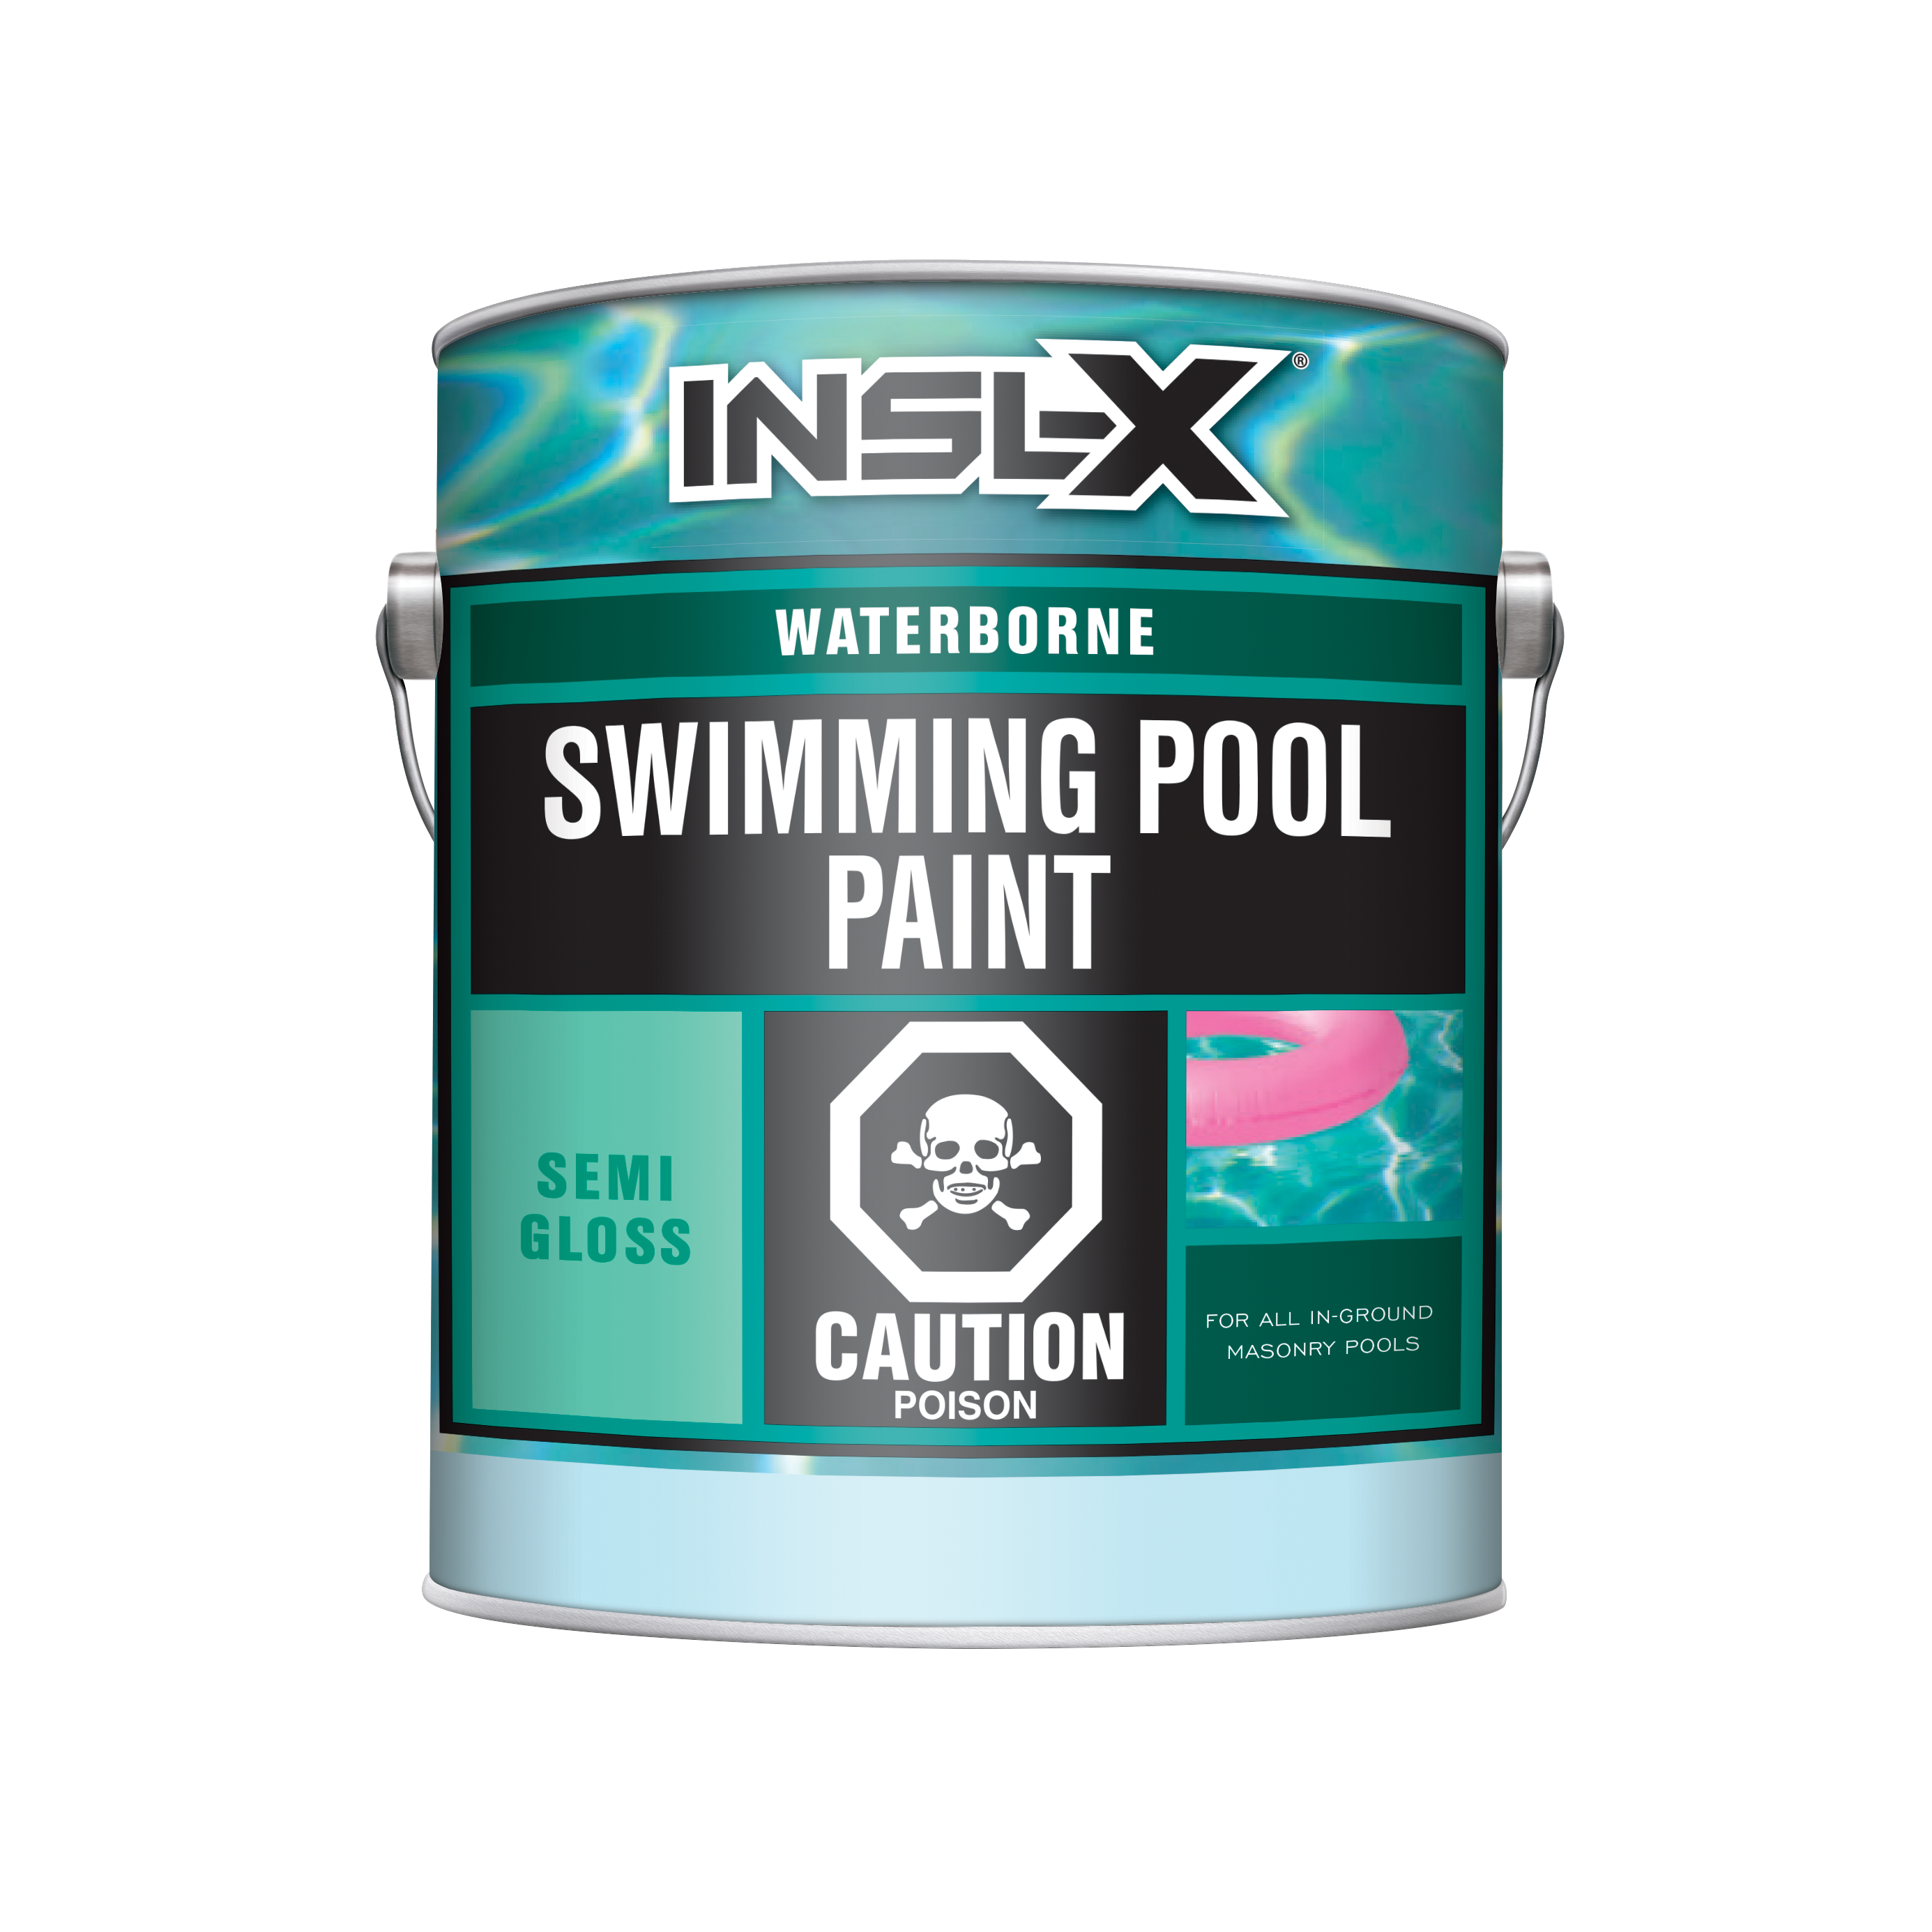 INSL-X Waterborne Swimming Pool Paint - WR Semi-Gloss 3.79L - The Paint People